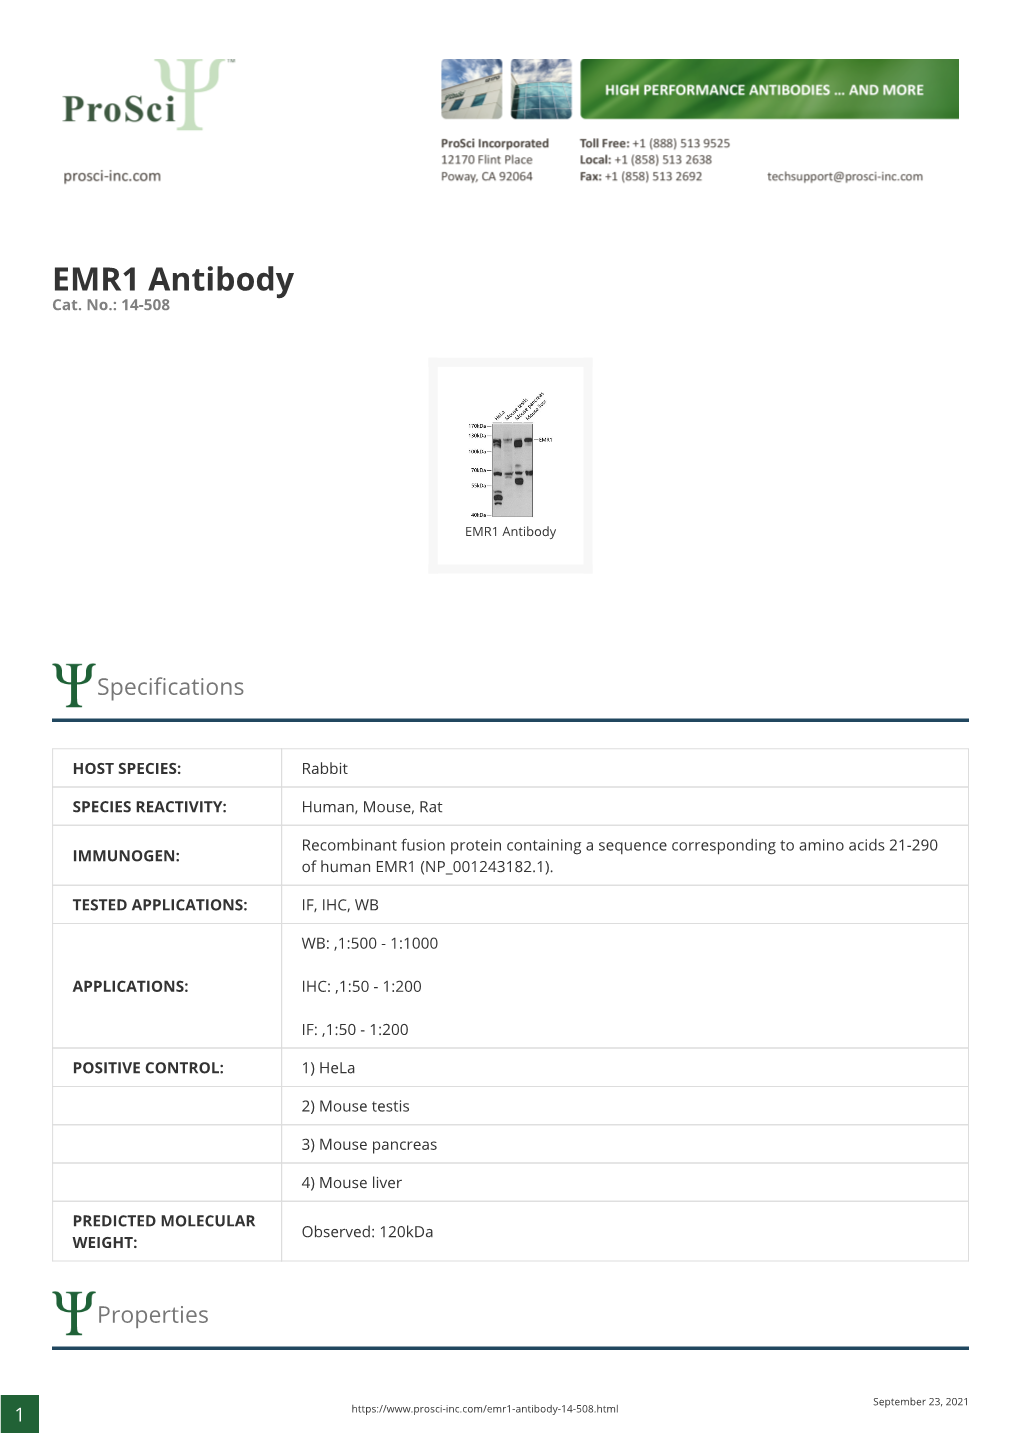 EMR1 Antibody Cat